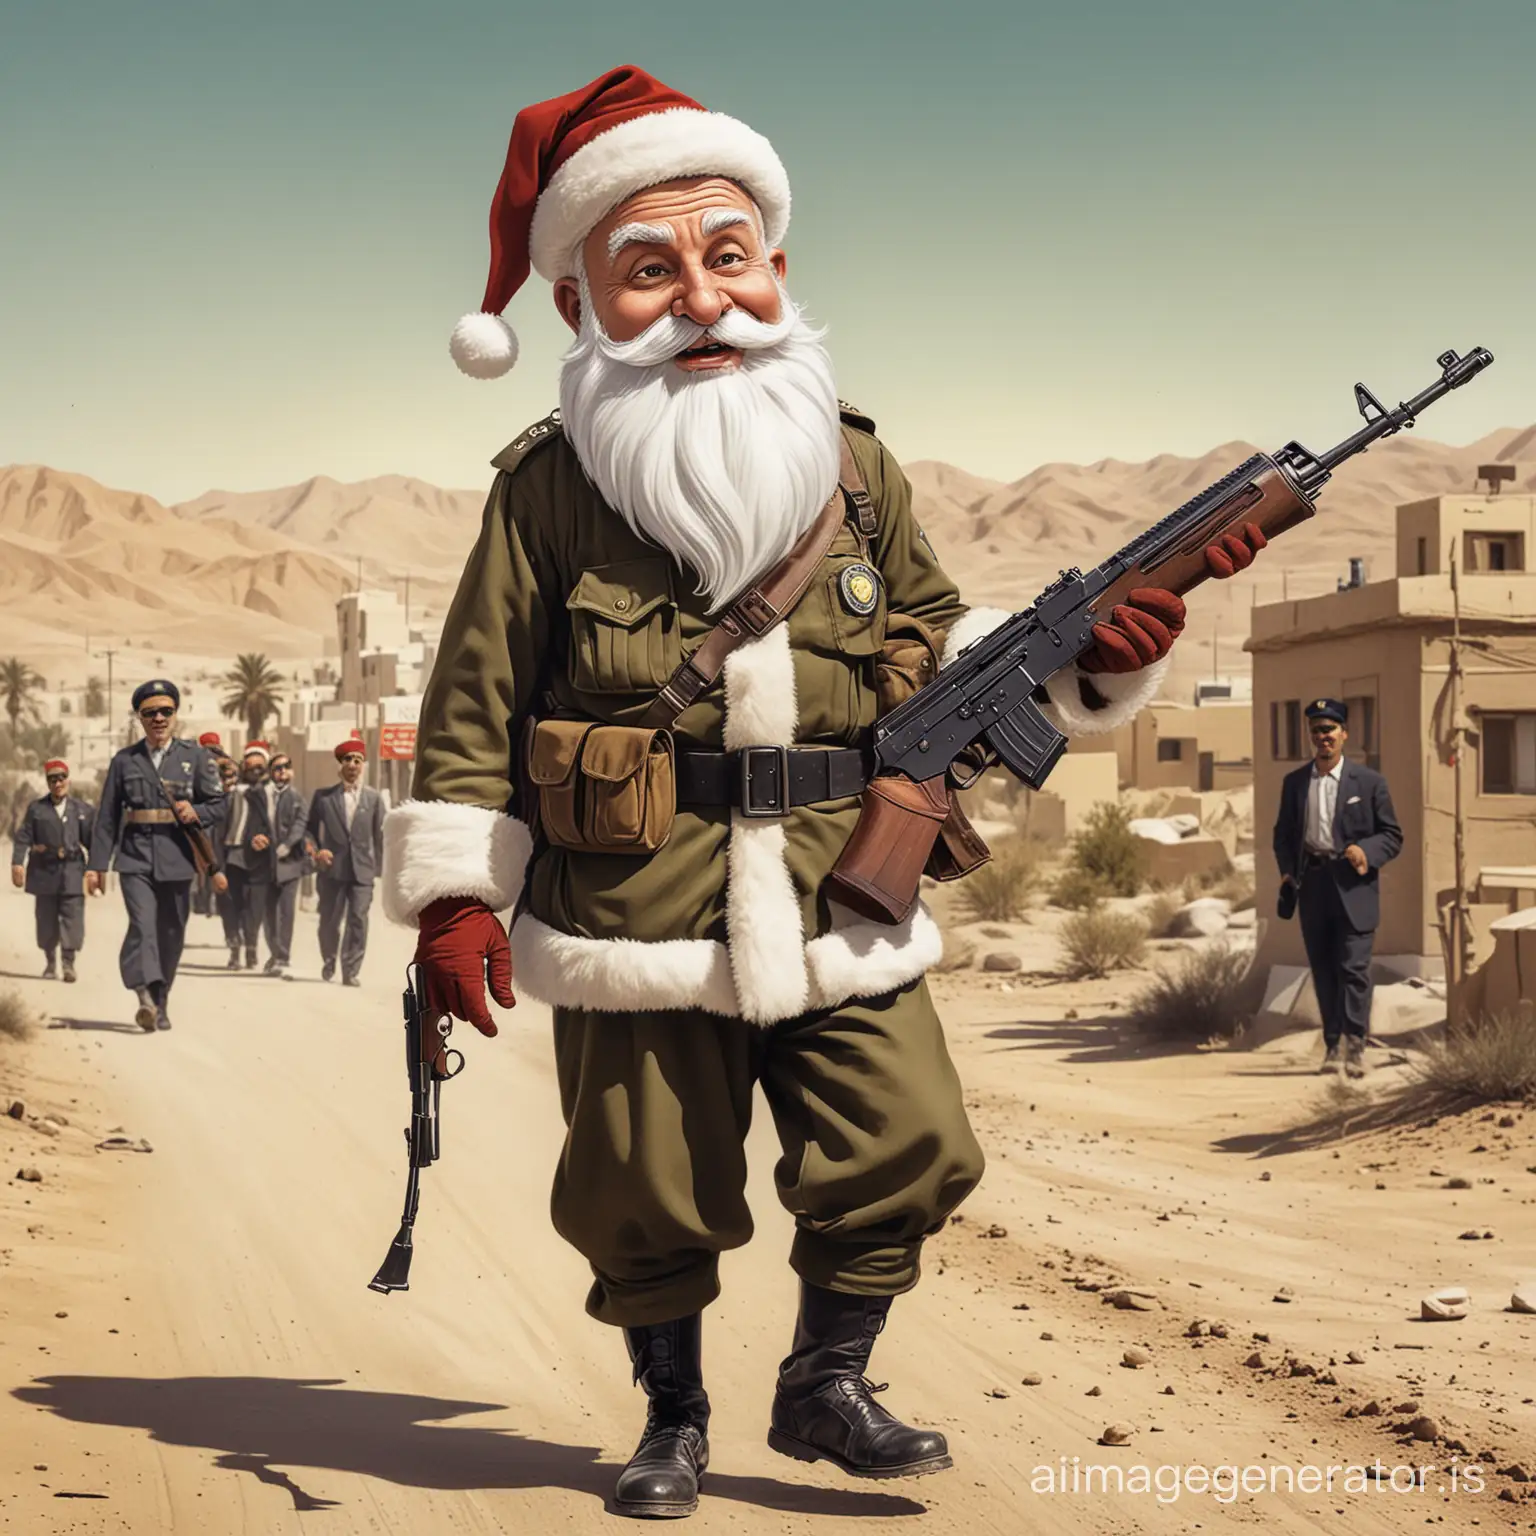 Cheerful-Santa-Claus-Cop-Strolling-in-a-Festive-Neighborhood